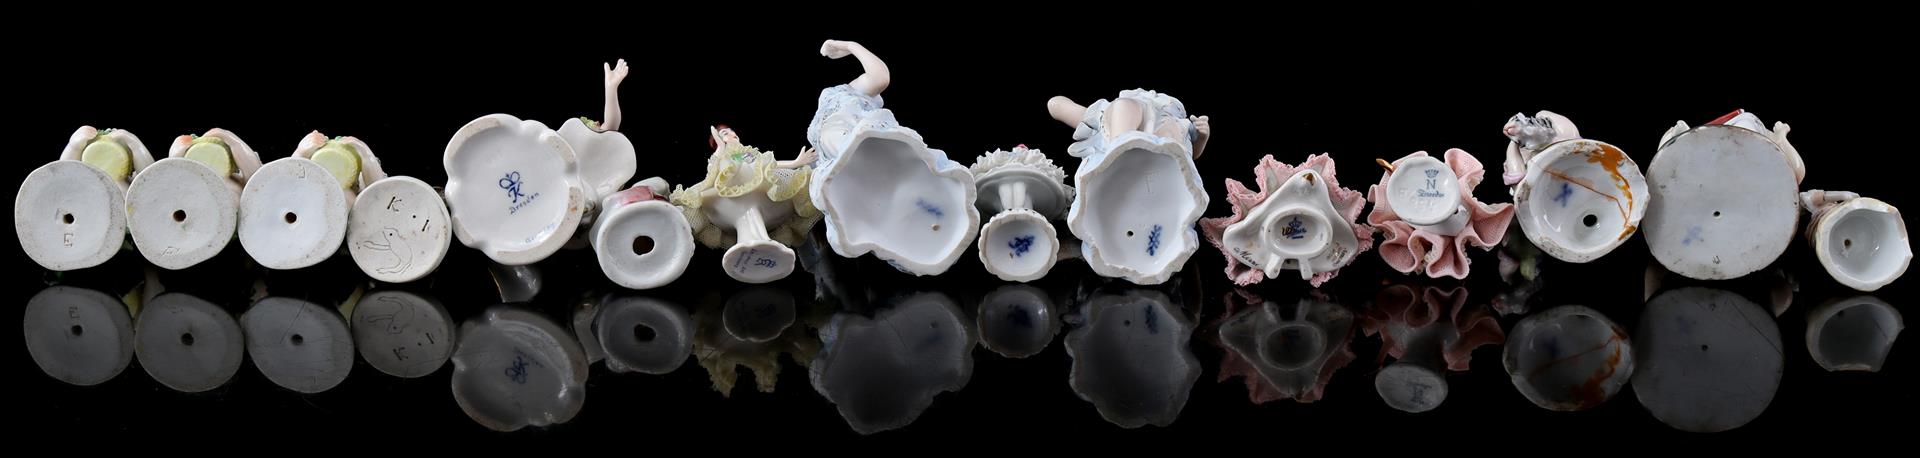 15 porcelain figurines - Image 3 of 3